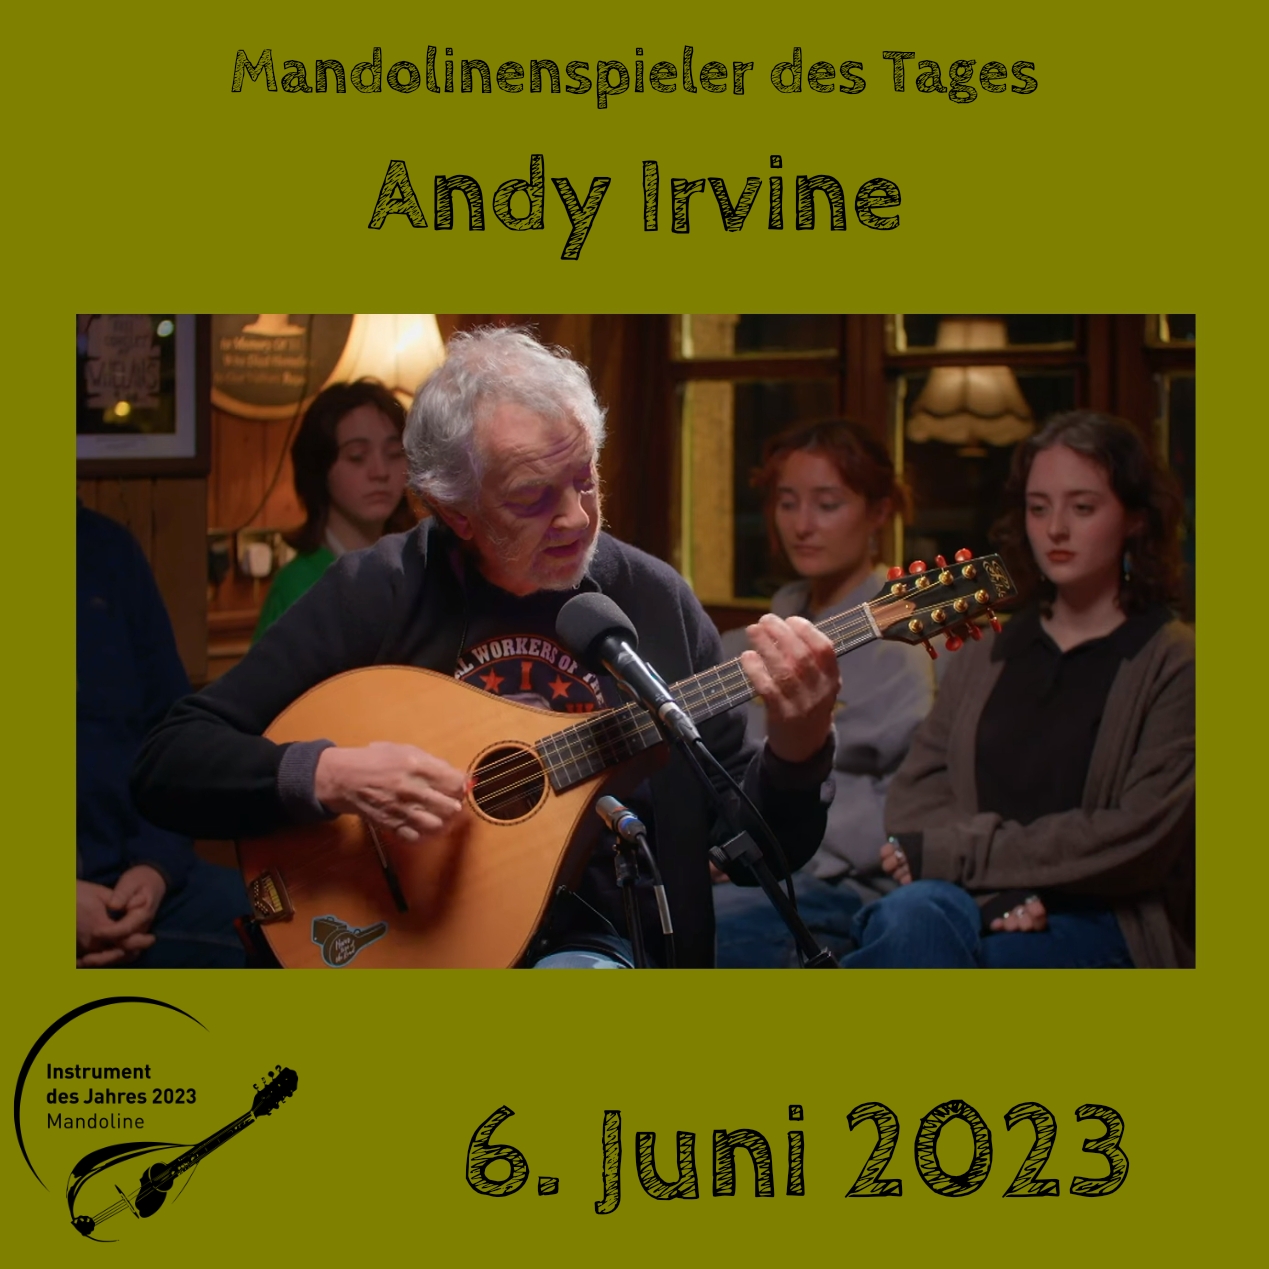 6. Juni - Andy Irvine Mandoline Instrument des Jahres 2023 Mandolinenspieler Mandolinenspielerin des Tages